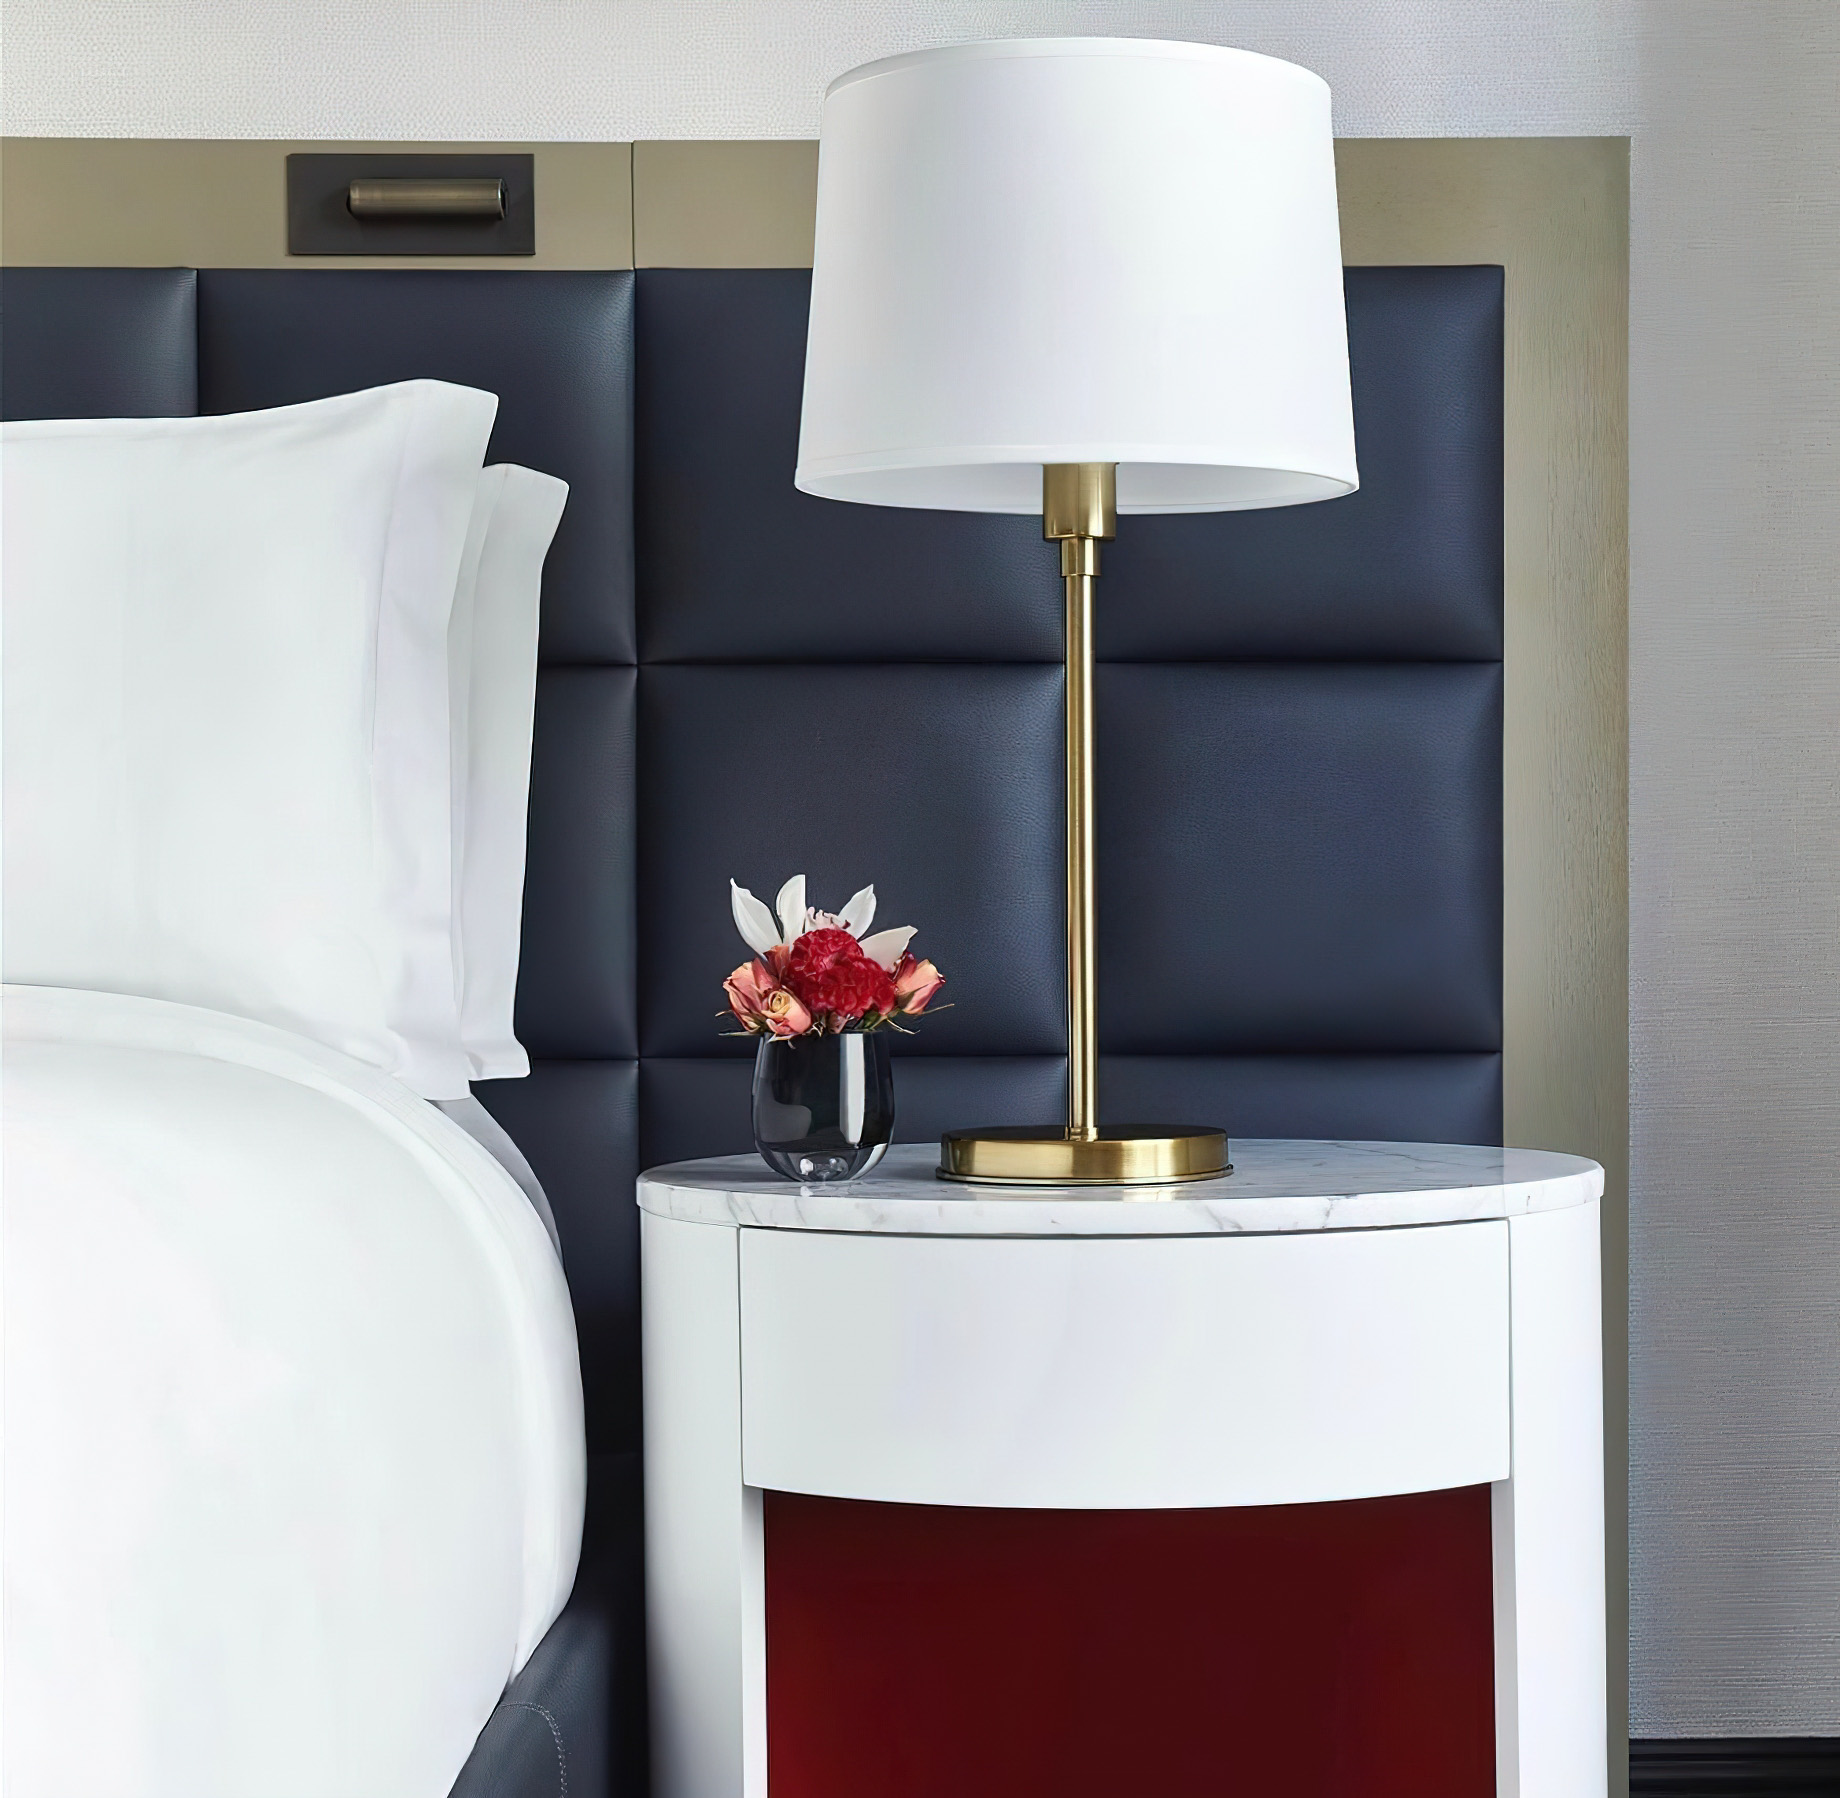 The Ritz-Carlton Washington, D.C. Hotel – Washington, D.C. USA – Guest Room Decor